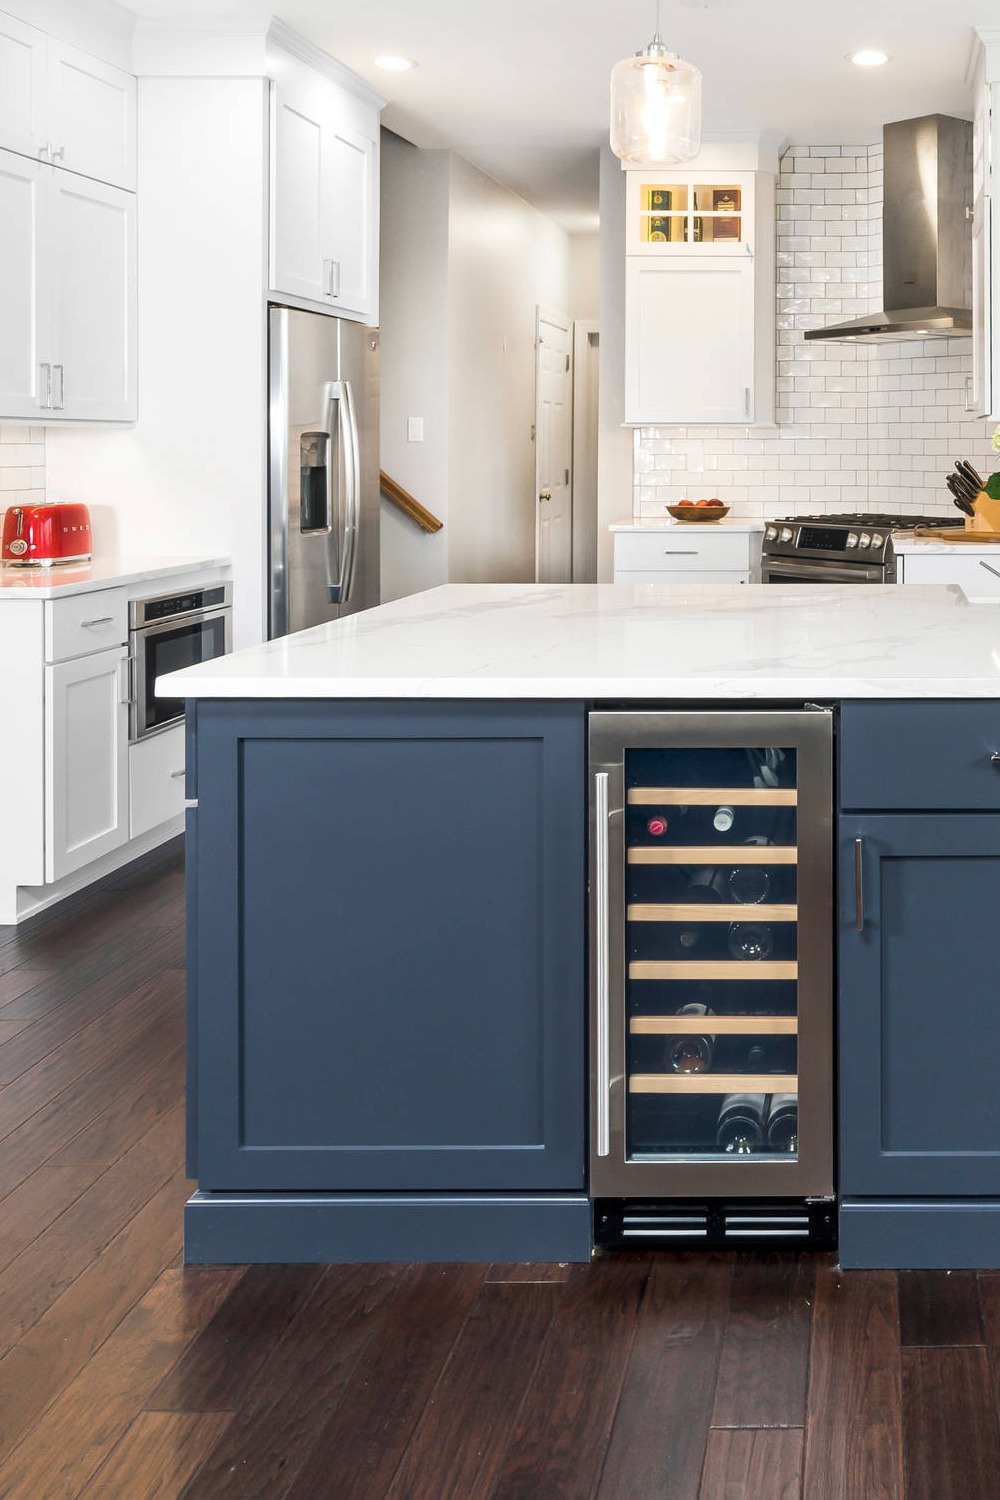 Blue Island White Kitchen Cabinets Maintenance Free Quartz Countertops Subway Backsplash Dark Floor